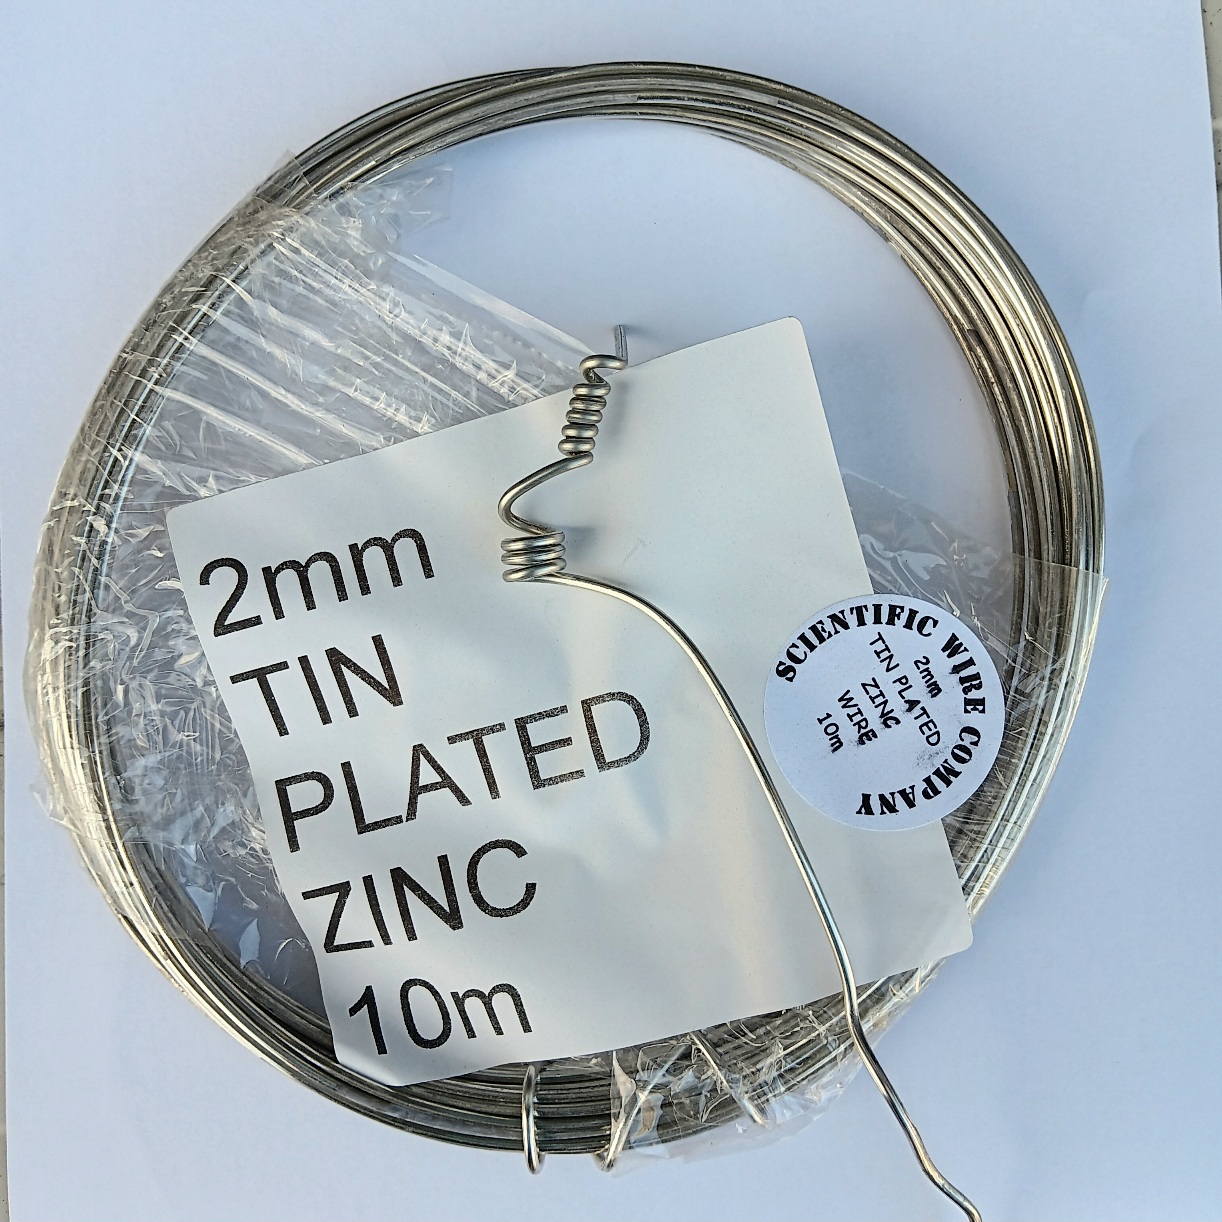 10m 2mm DIAMETER TIN PLATED ZINC WIRE